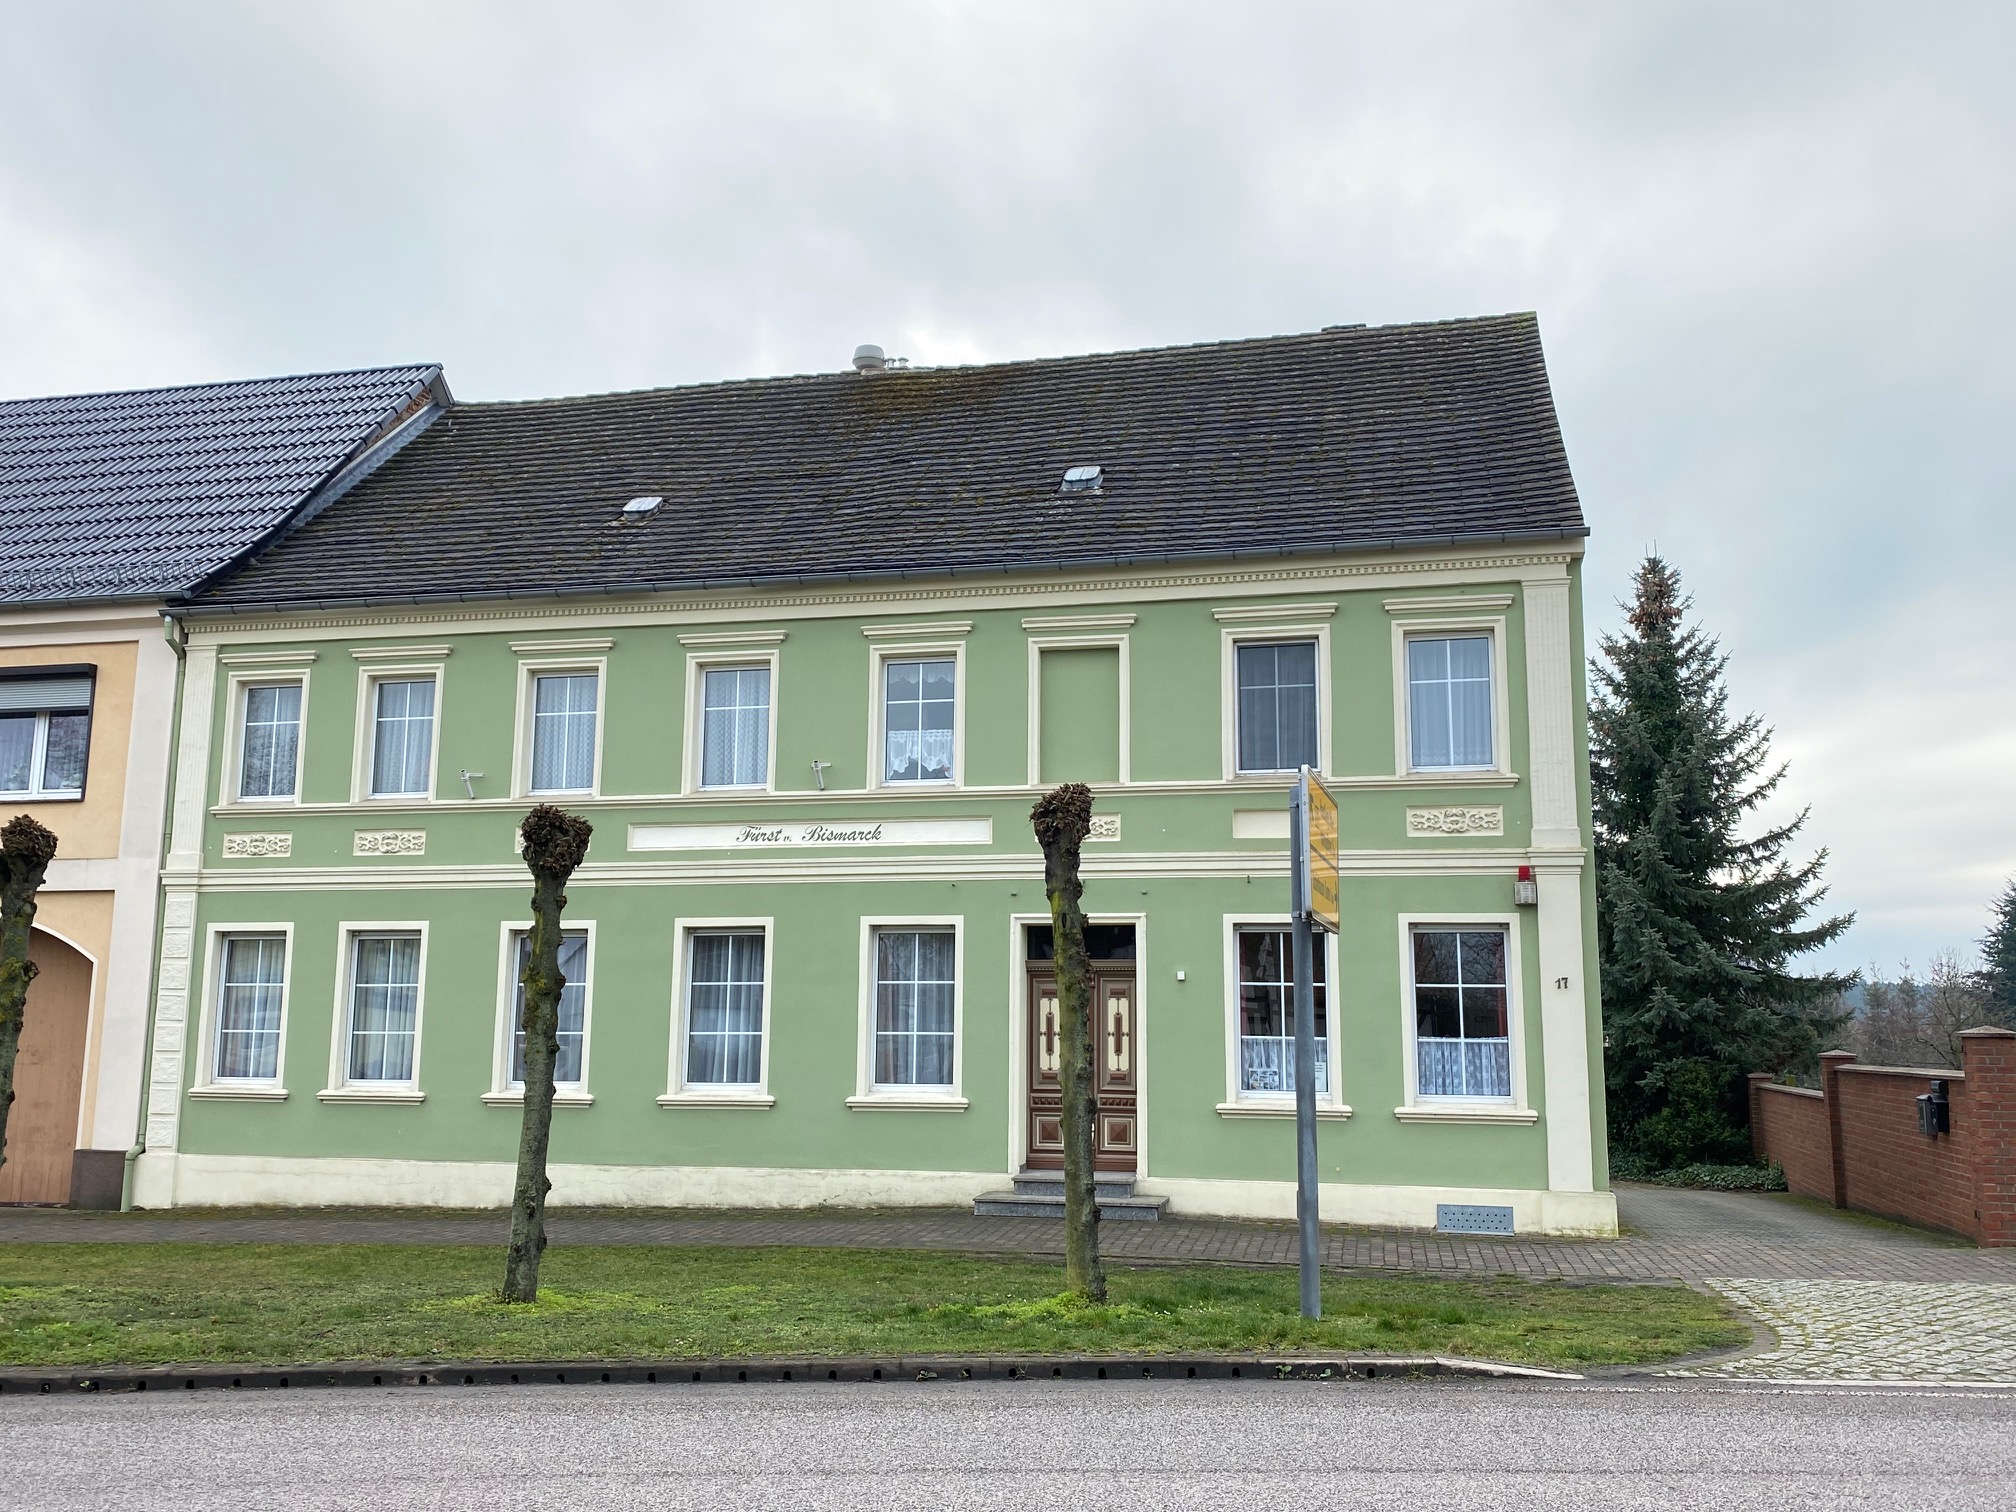 Haus kaufen in MecklenburgStrelitz ImmoPionier.de Die